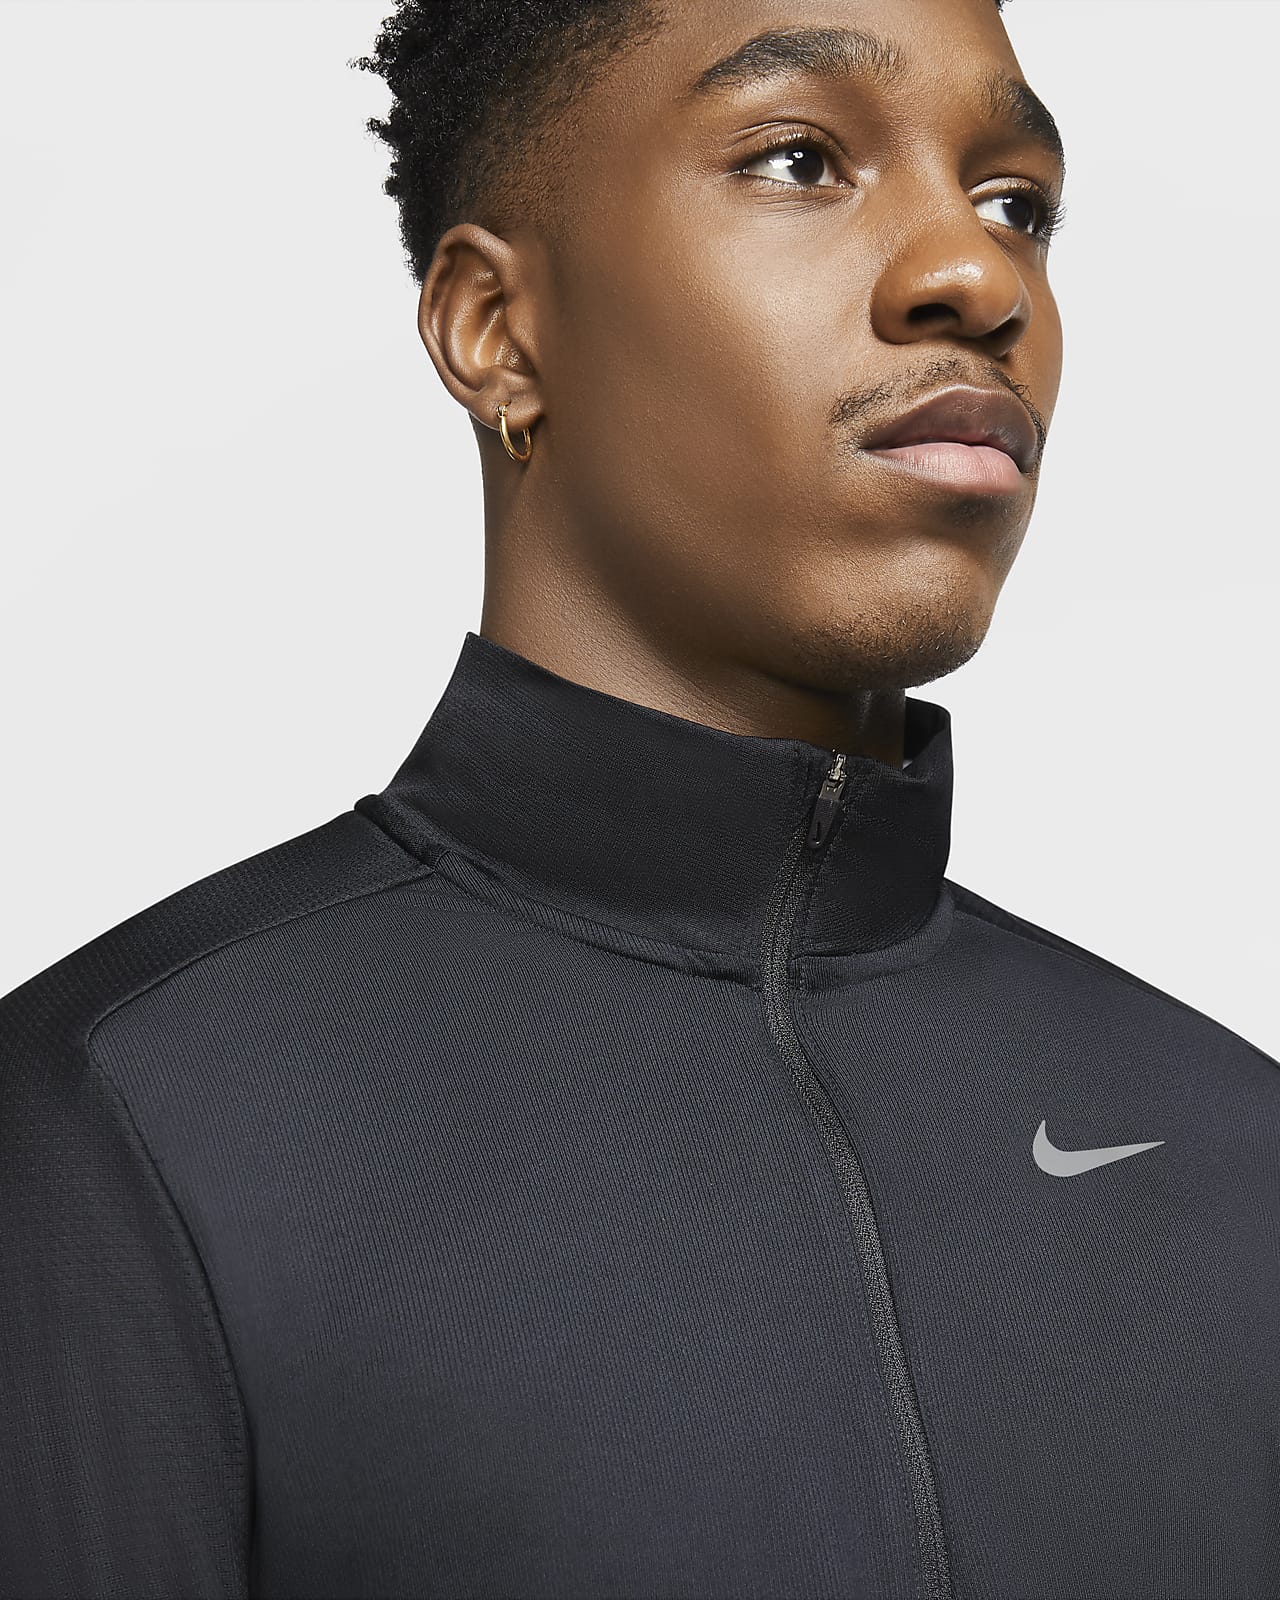 Nike Dri-FIT Men's 1/2-Zip Running Top 